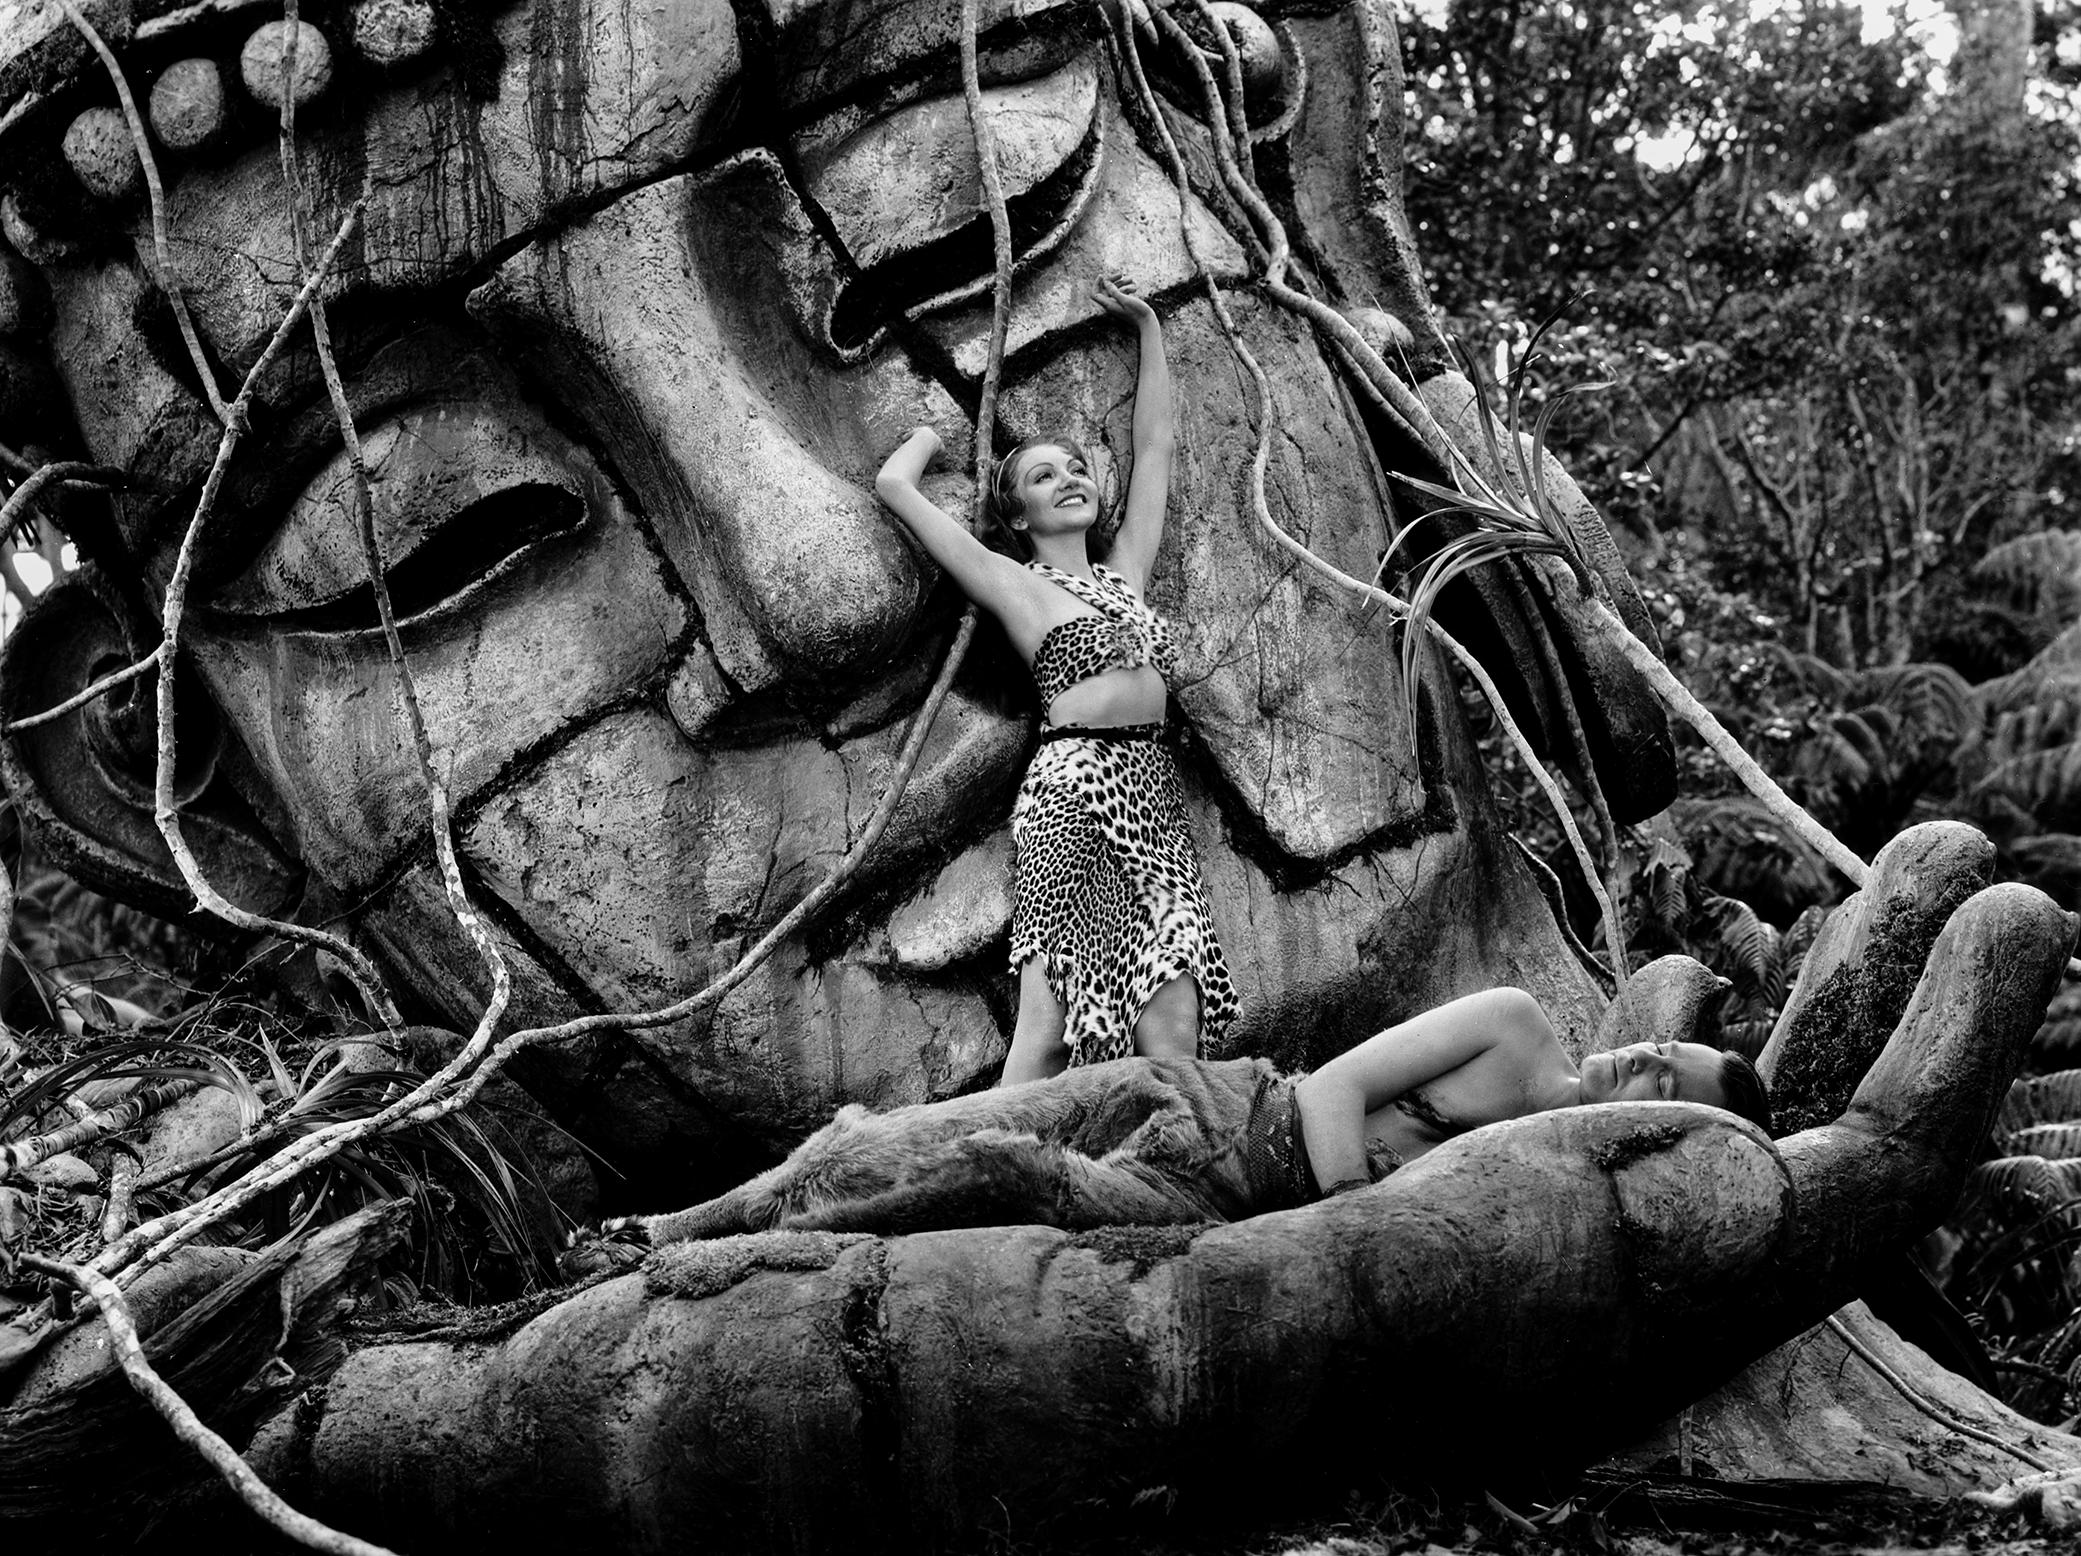 Unknown Portrait Photograph - Claudette Colbert in Awesome Jungle Scene